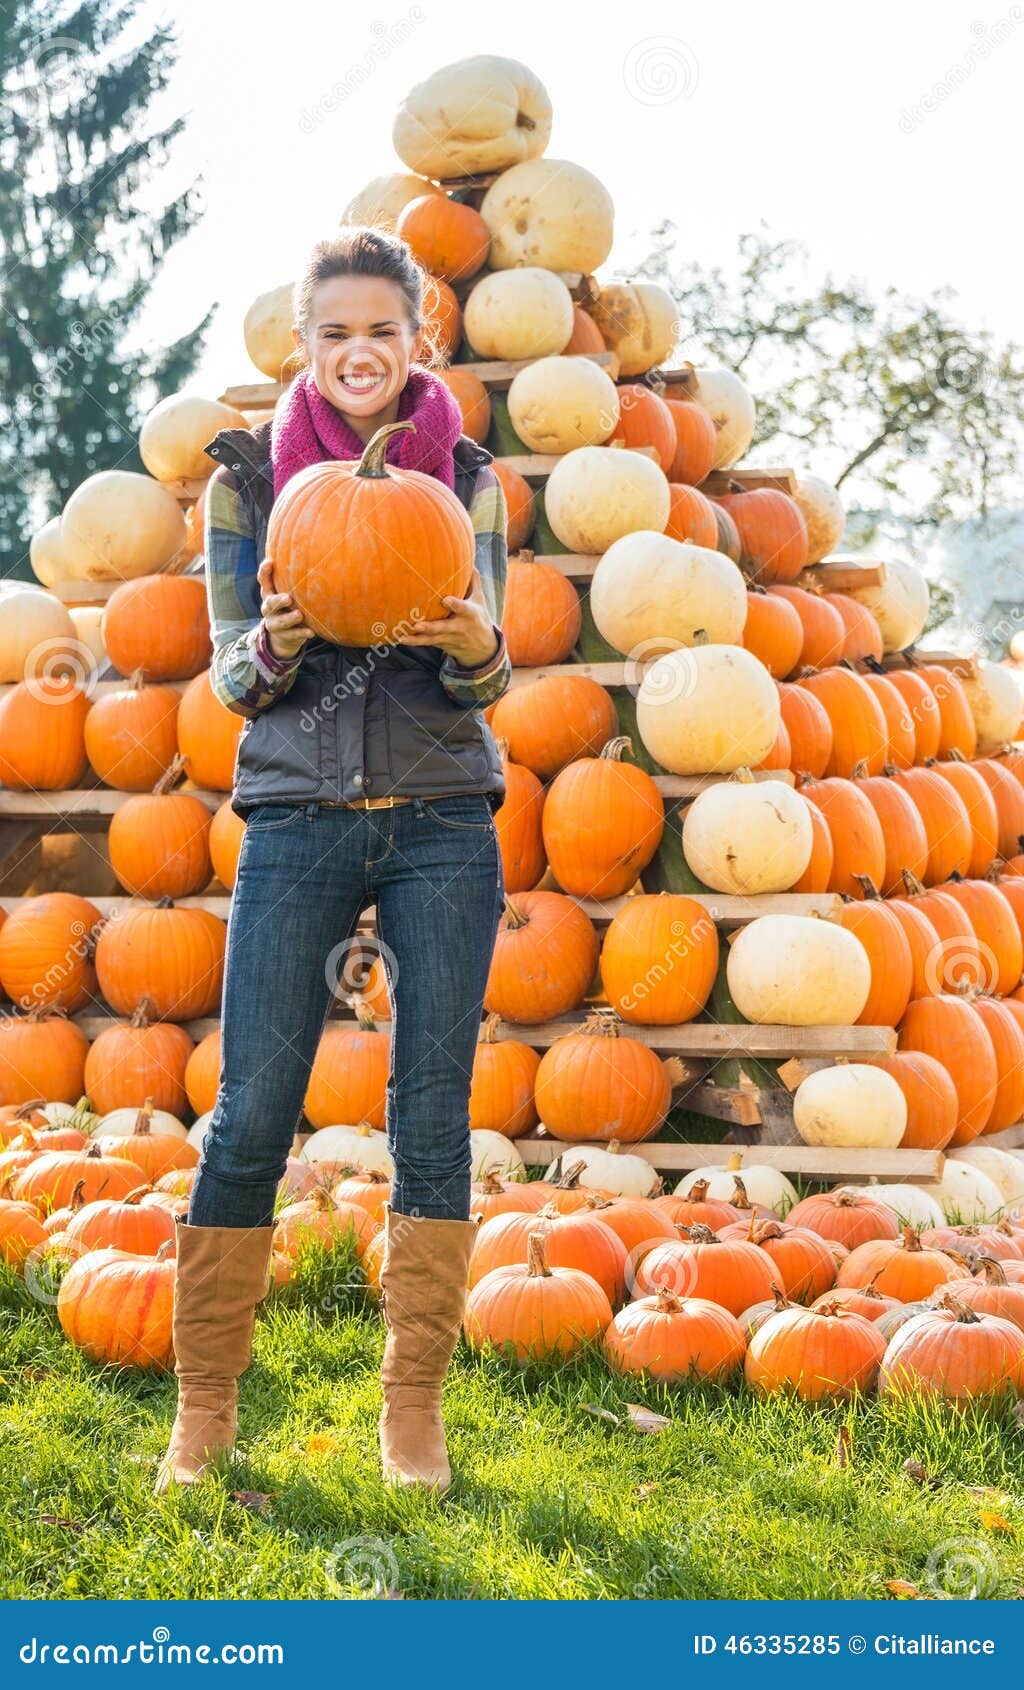 woman holding pumpkin in front of pumpkin piramide